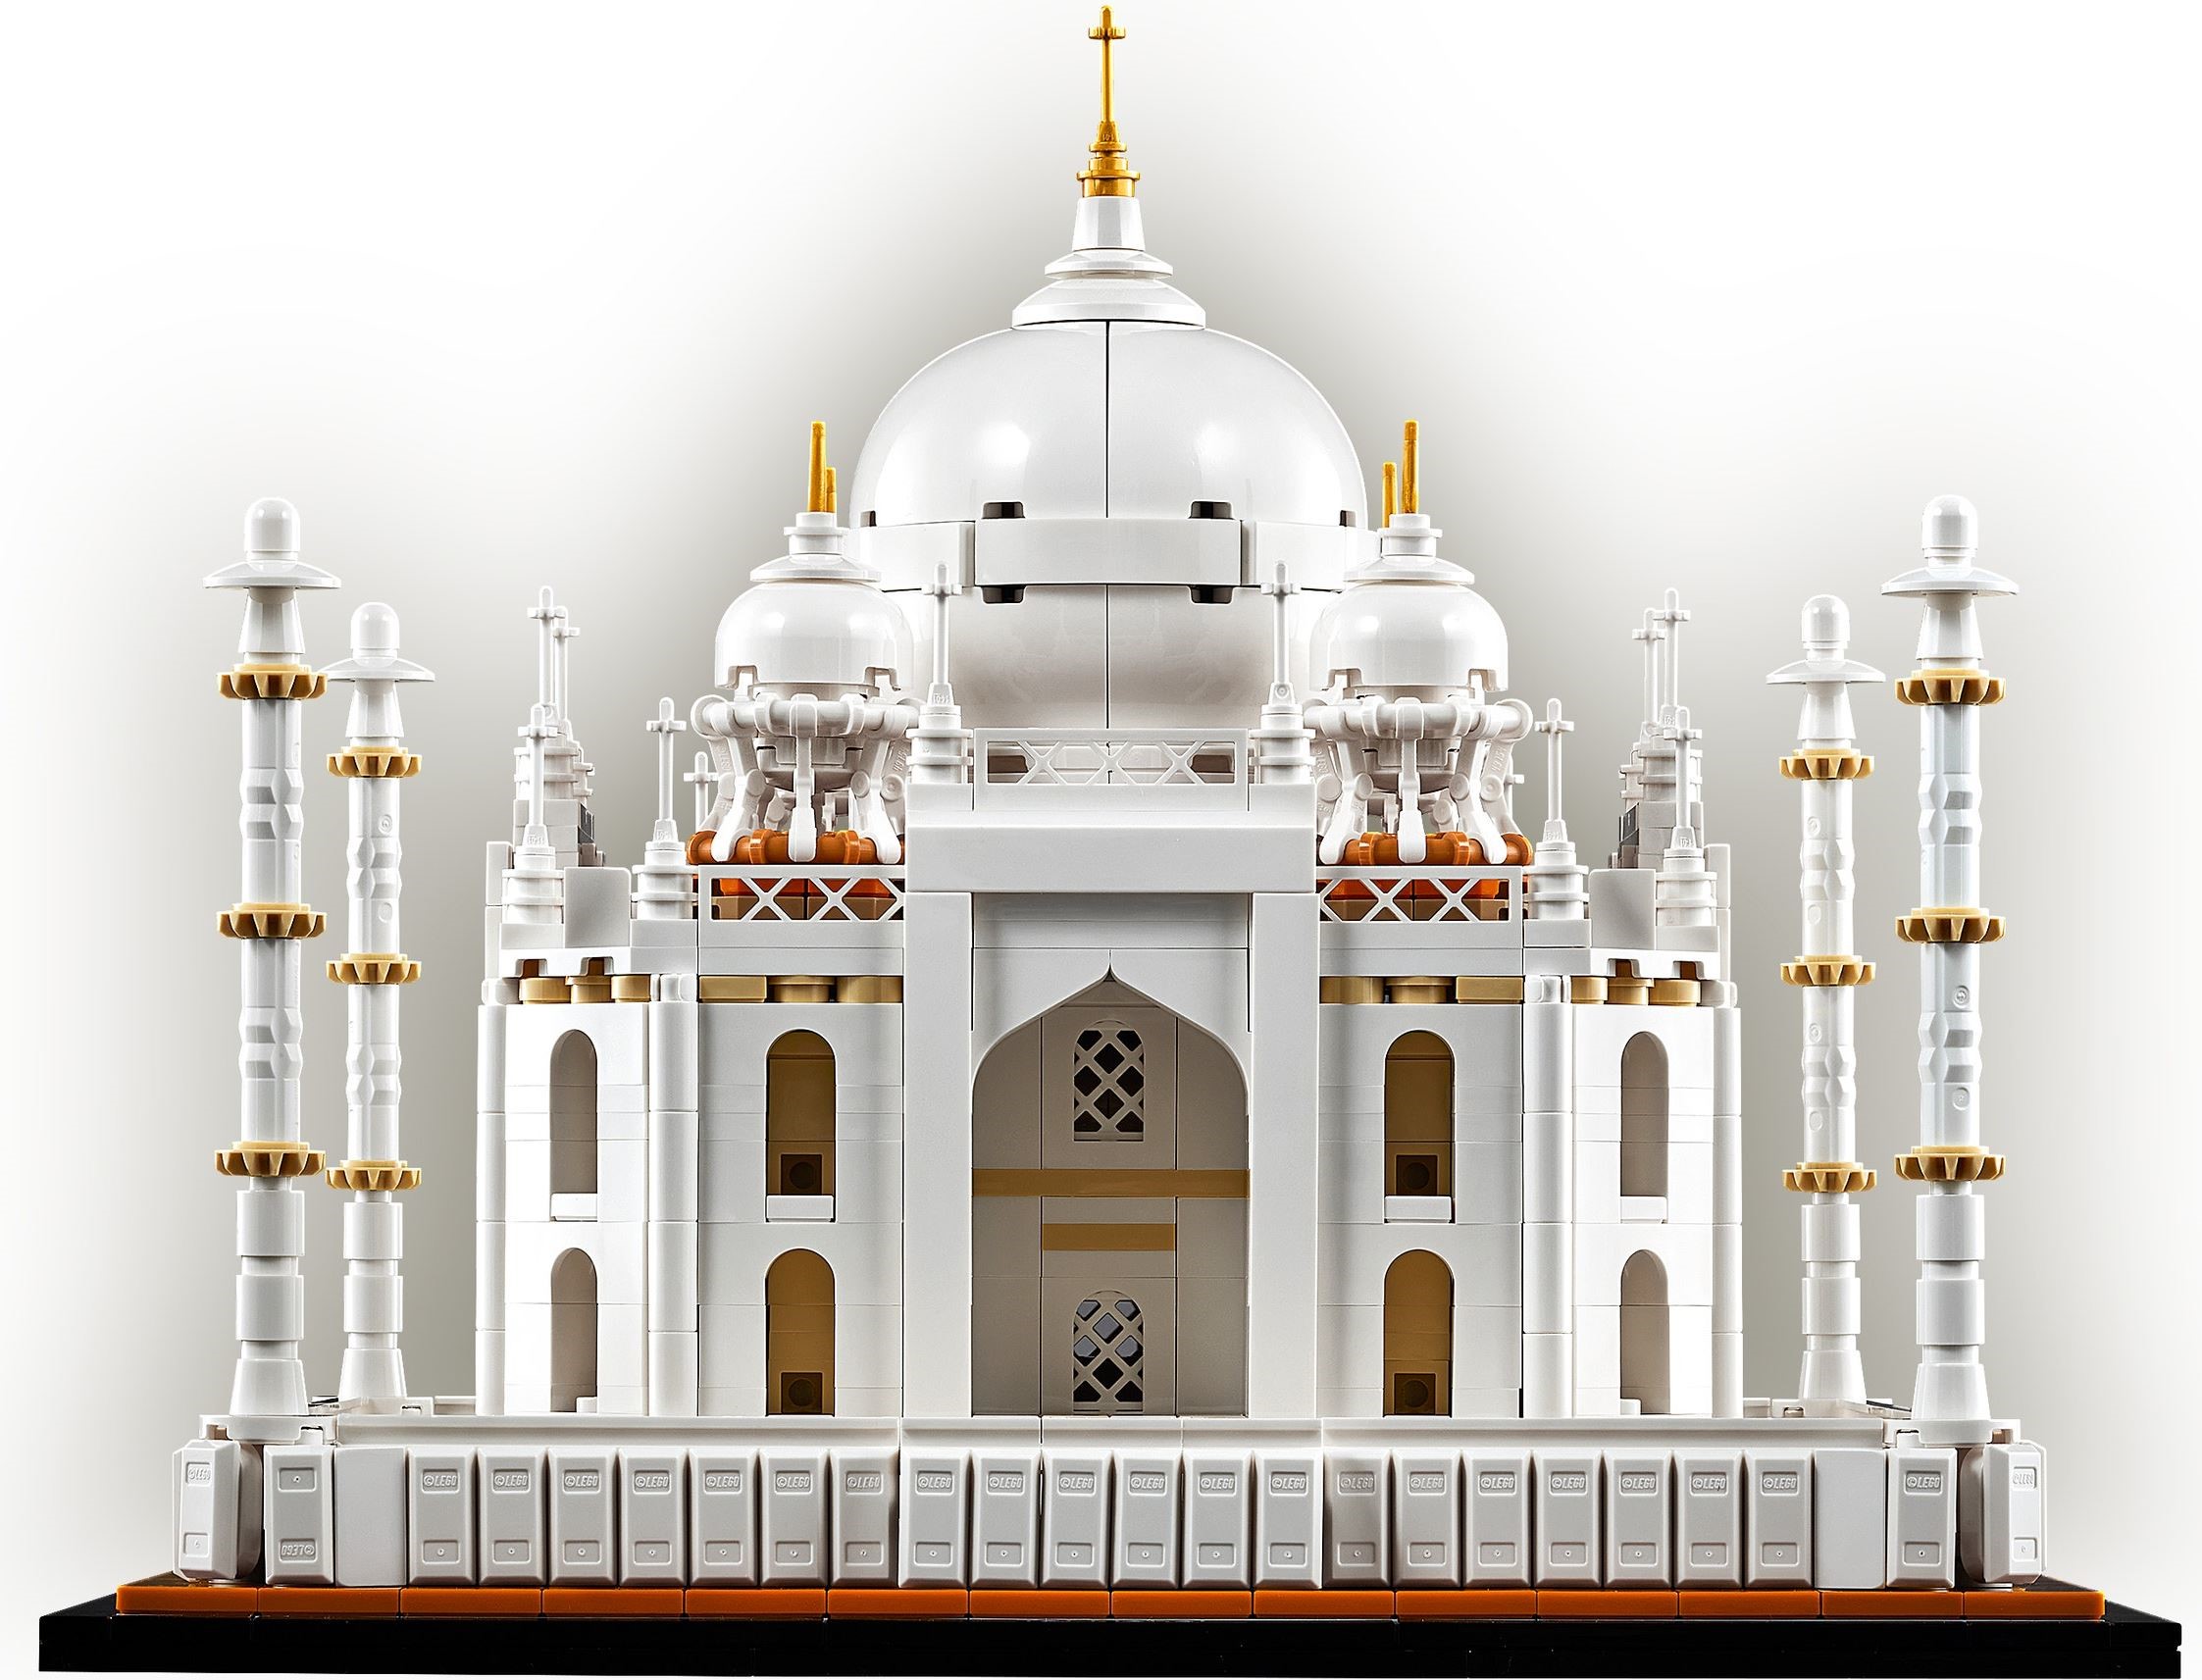 Lego Architecture Taj Mahal Building Set 21056 : Target